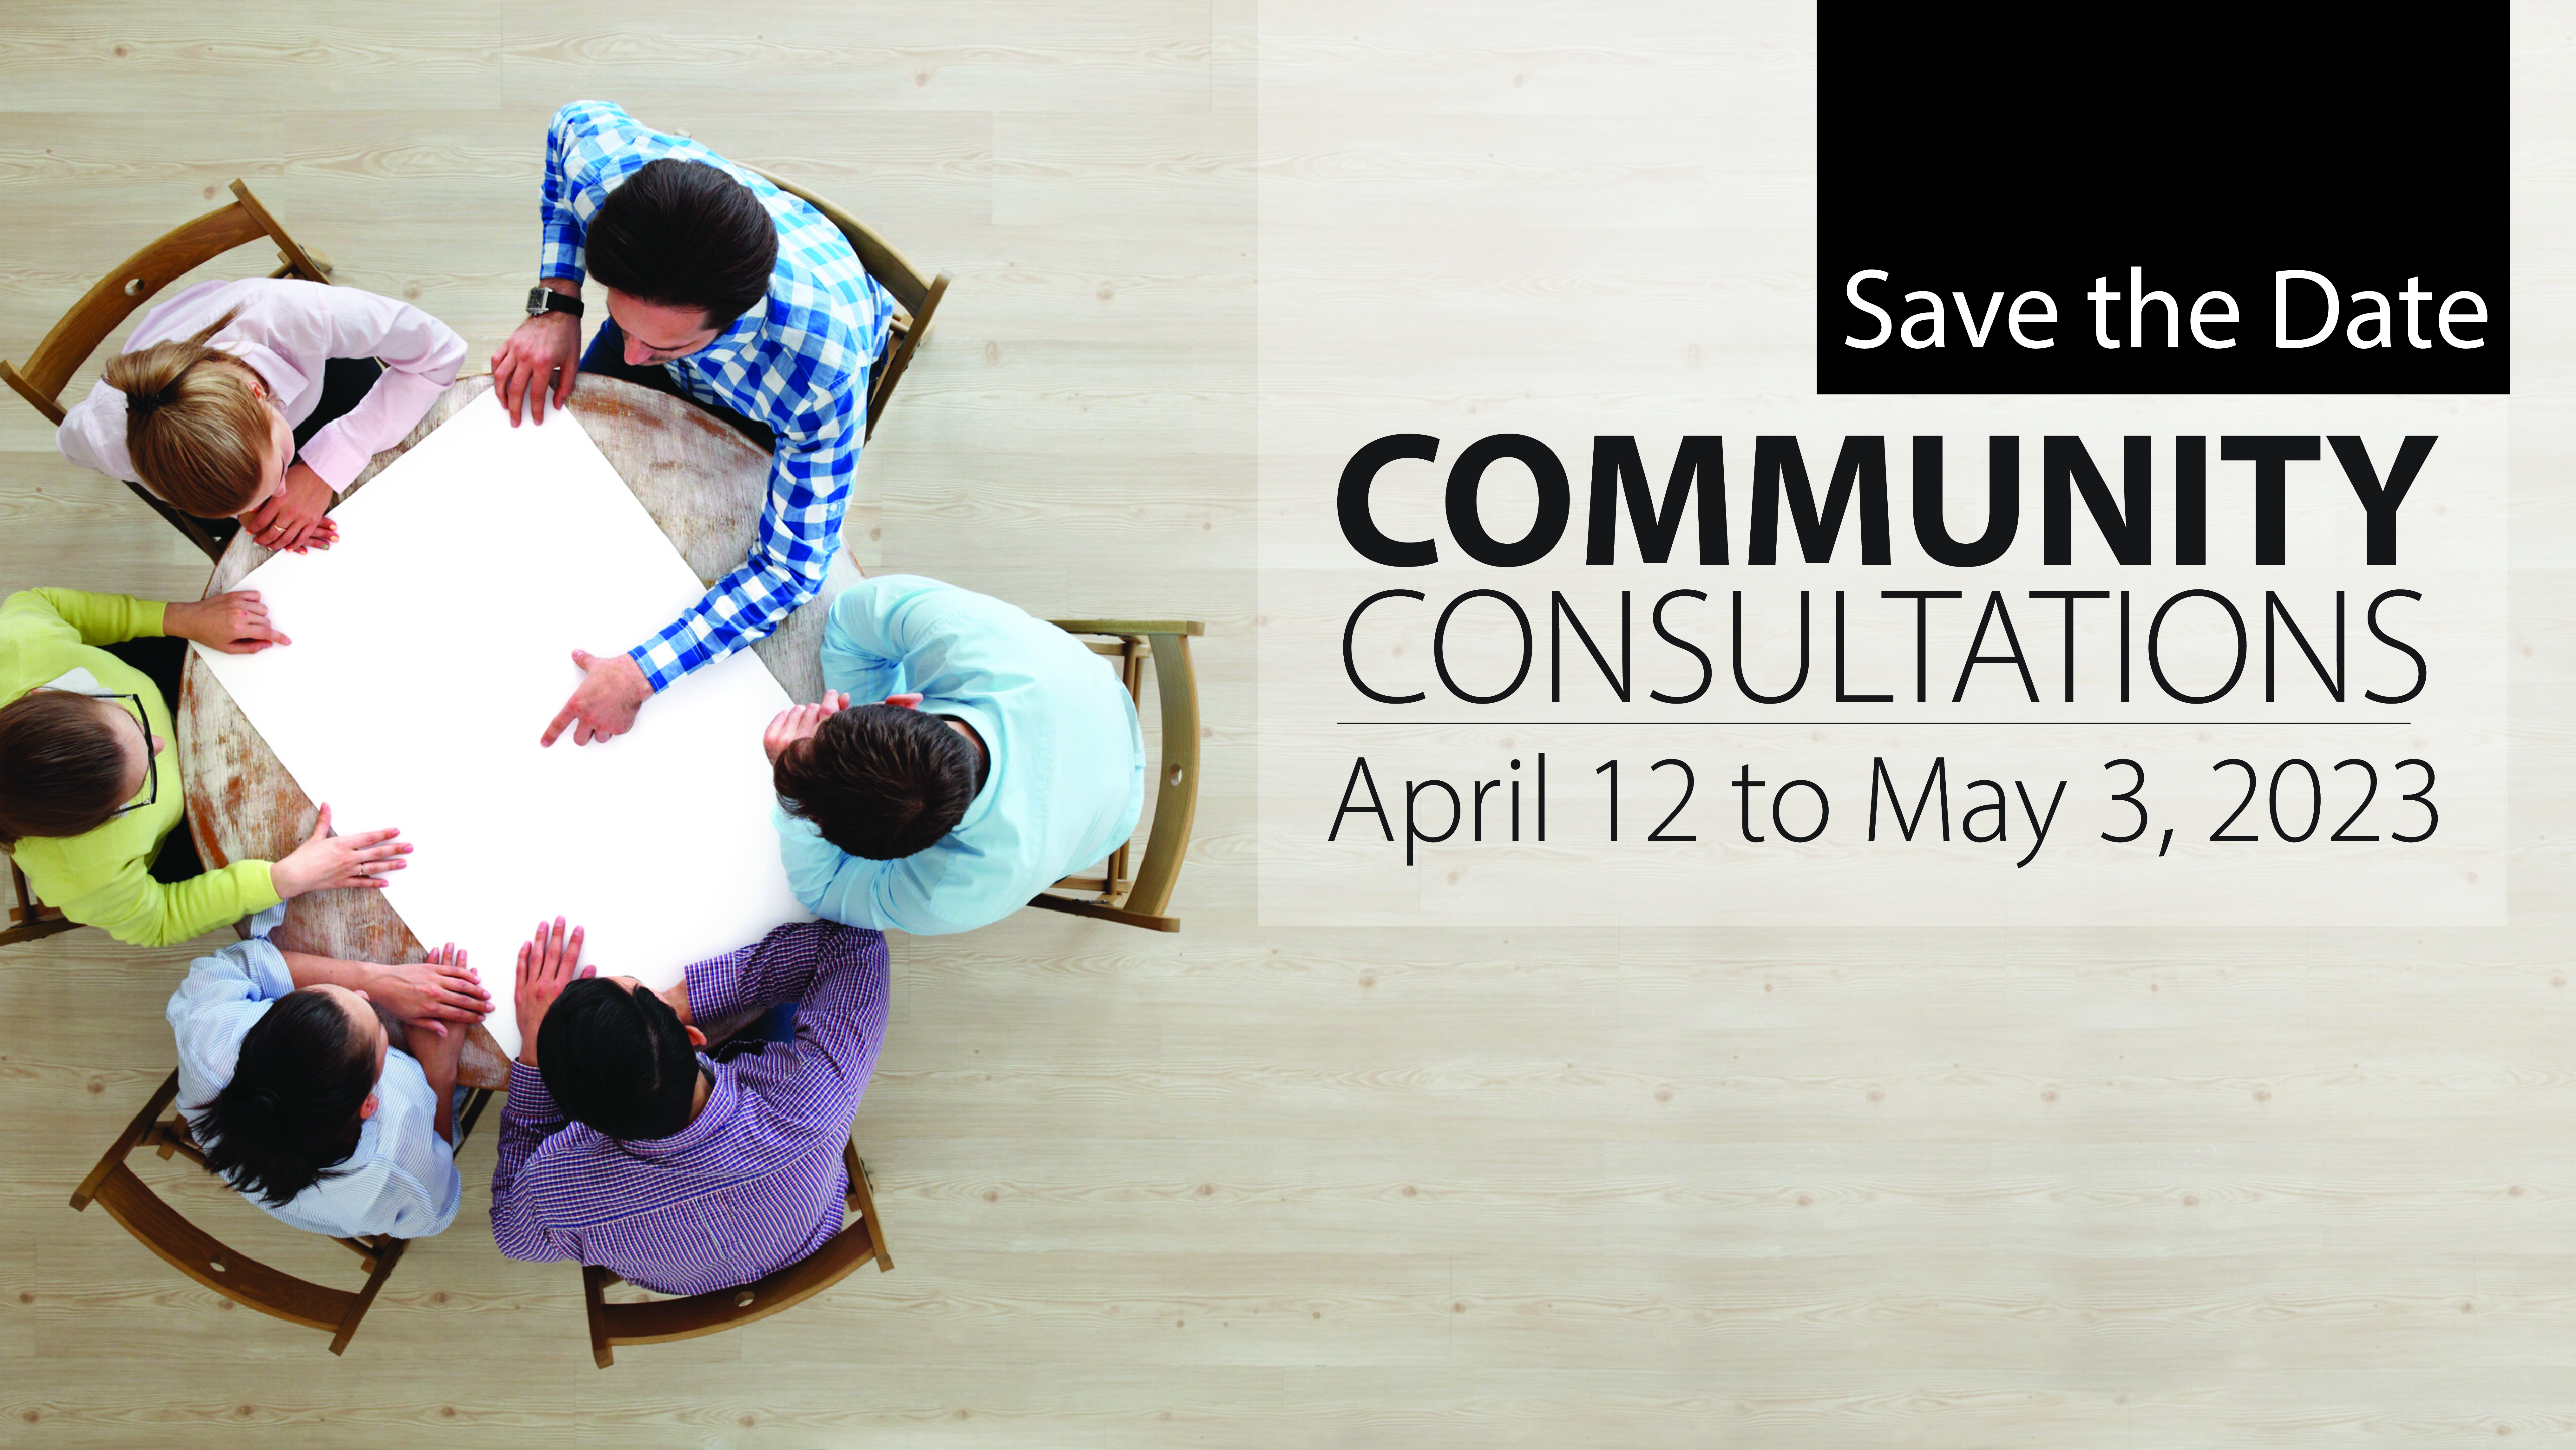 Attend Community Consultations